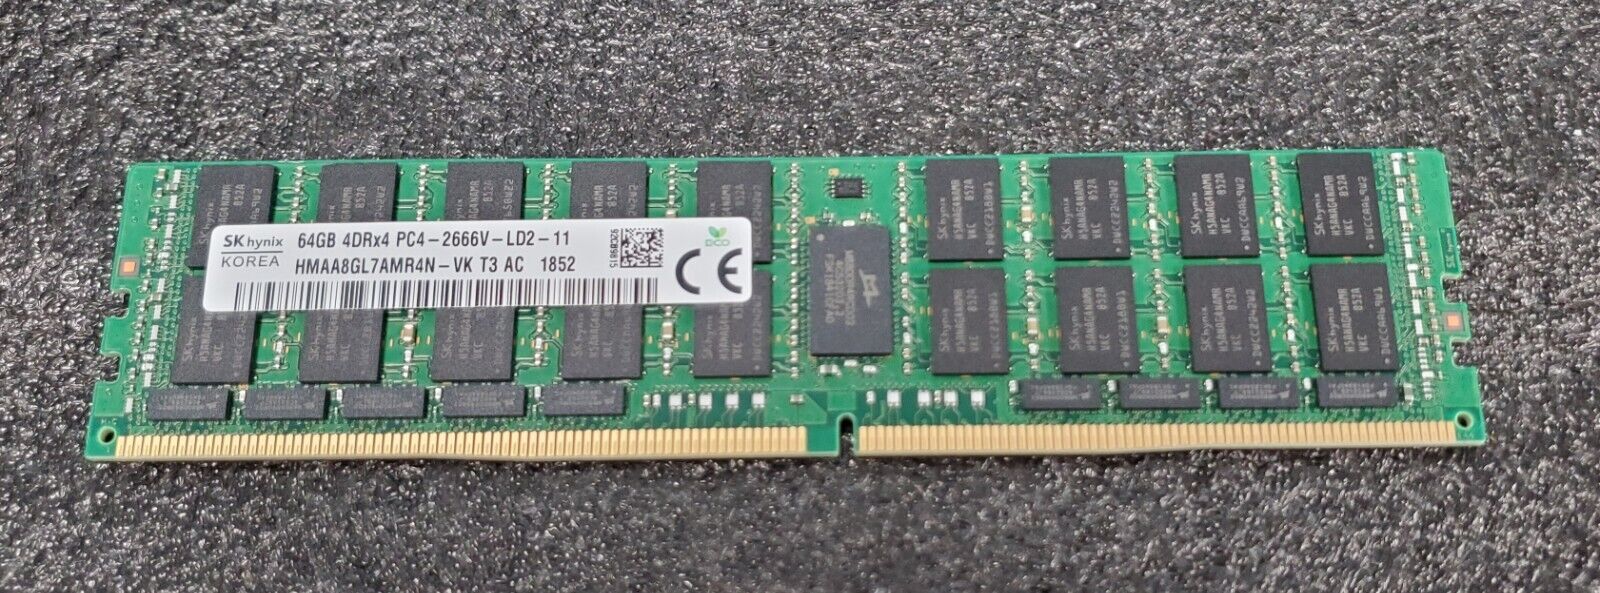 64GB SK hynix 4DRx4 PC4-2666V Registered ECC LRDIMM Server RAM HMAA8GL7AMR4N-VK